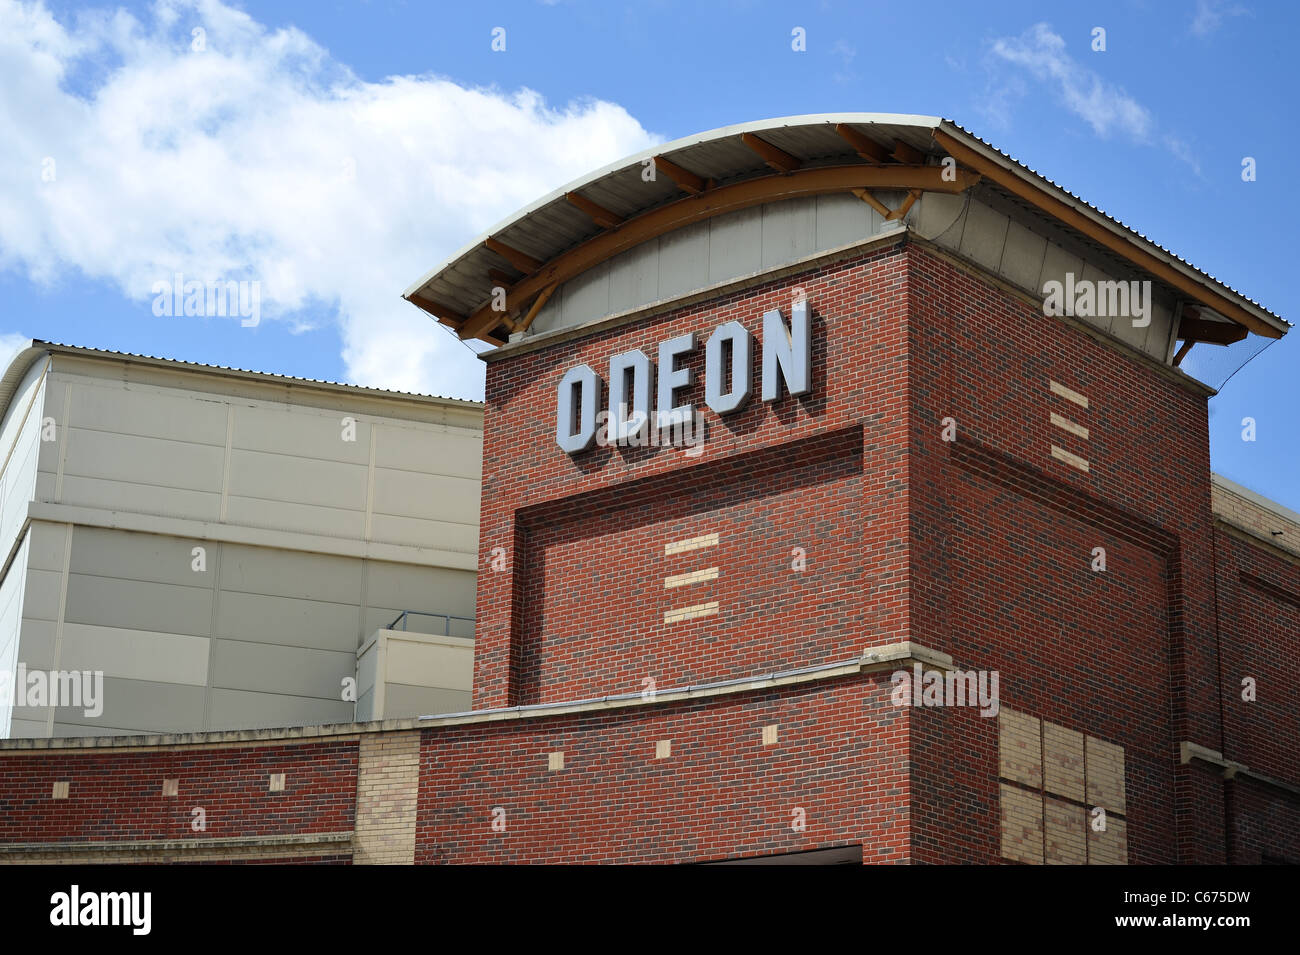 Odeon cinema sign Southend on Sea Stock Photo